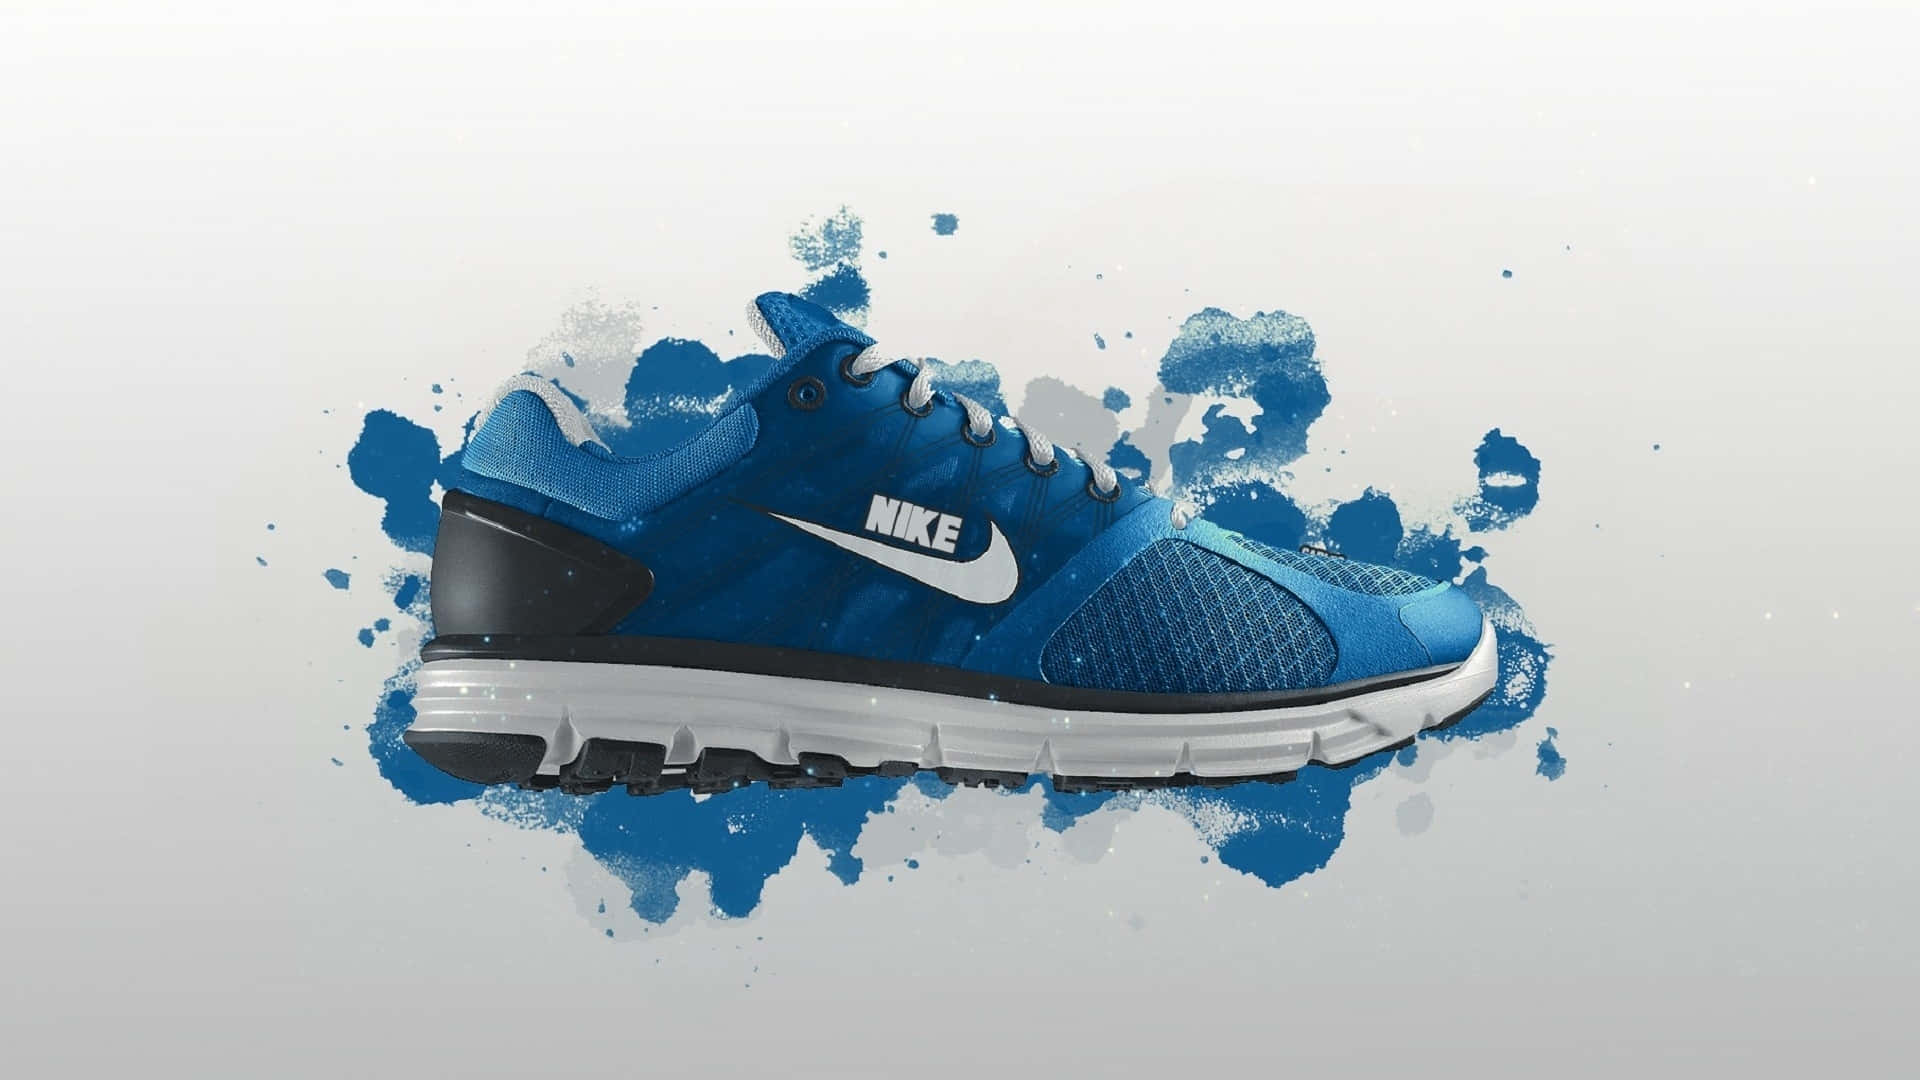 Blue Nike Shoe Splash Art Wallpaper